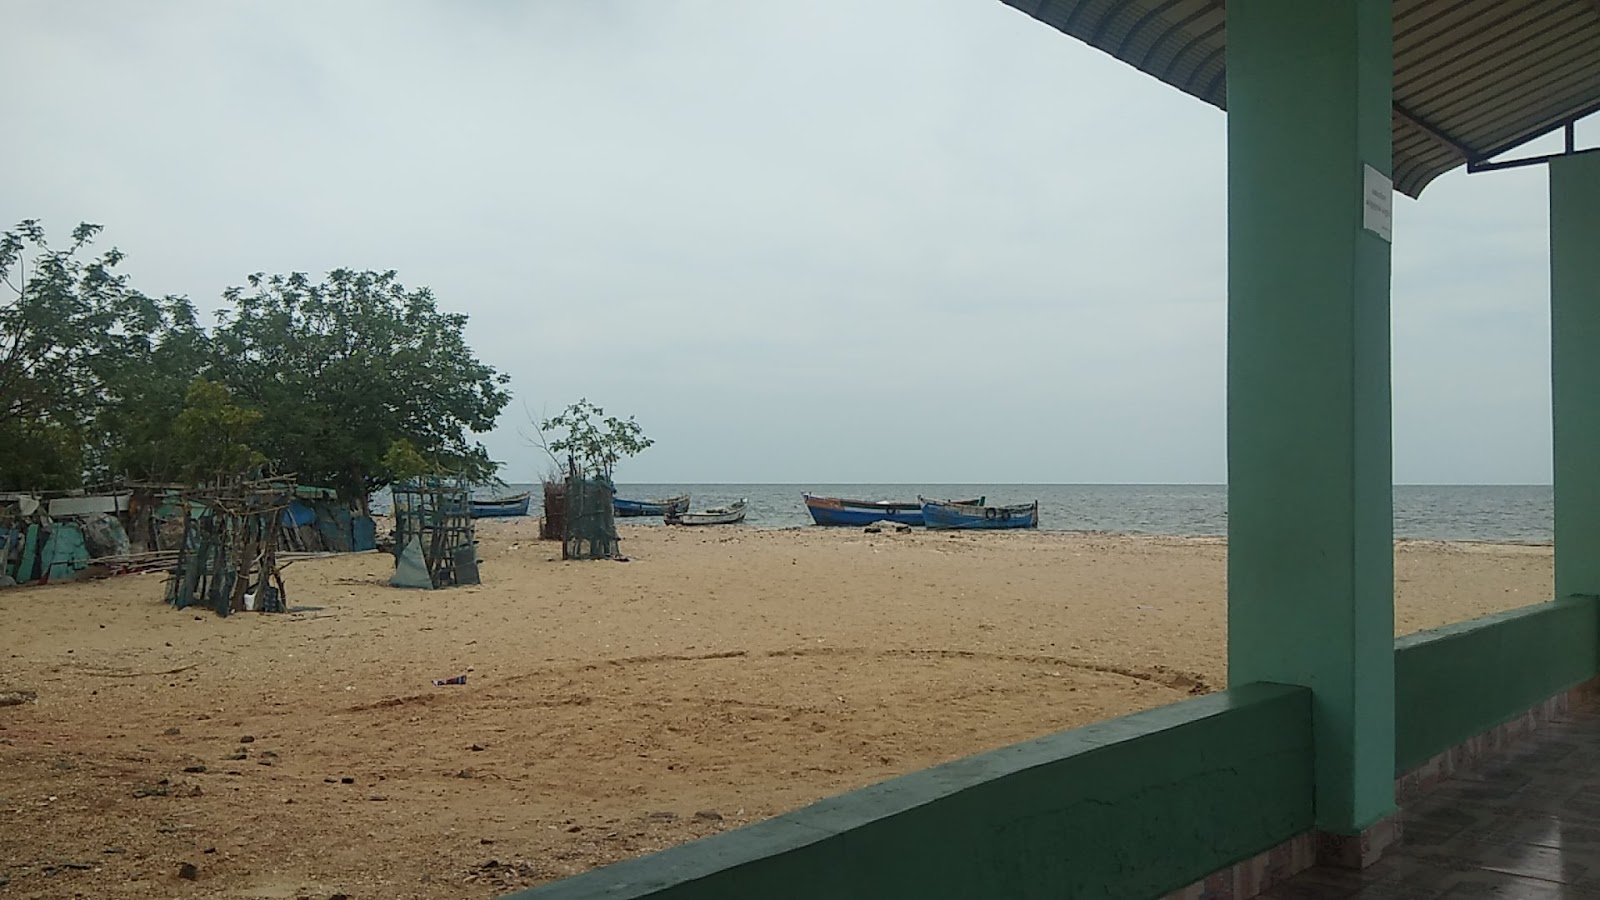 Foto de Tharuvai Kulam Beach - lugar popular entre os apreciadores de relaxamento